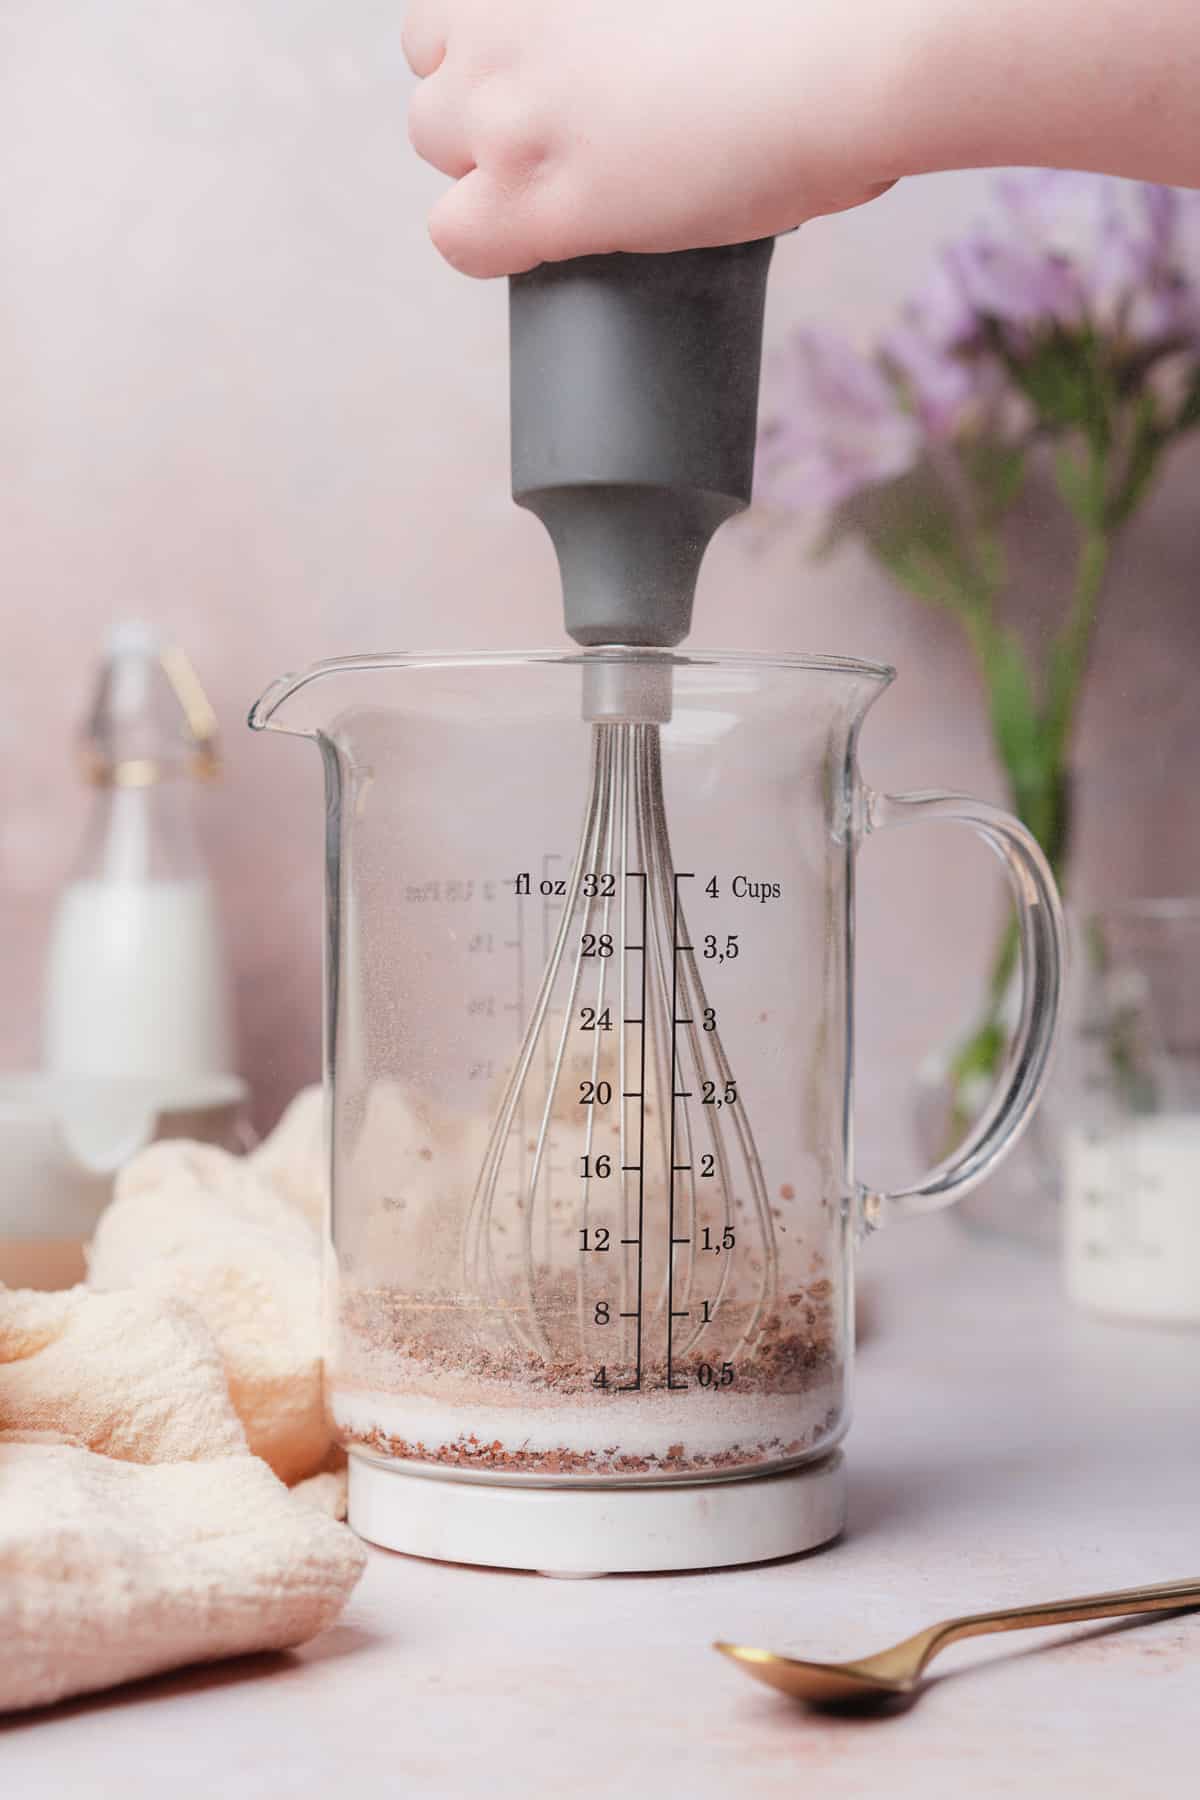 whisking instant coffee, sweetener, salt and cinnamon in a glass beaker